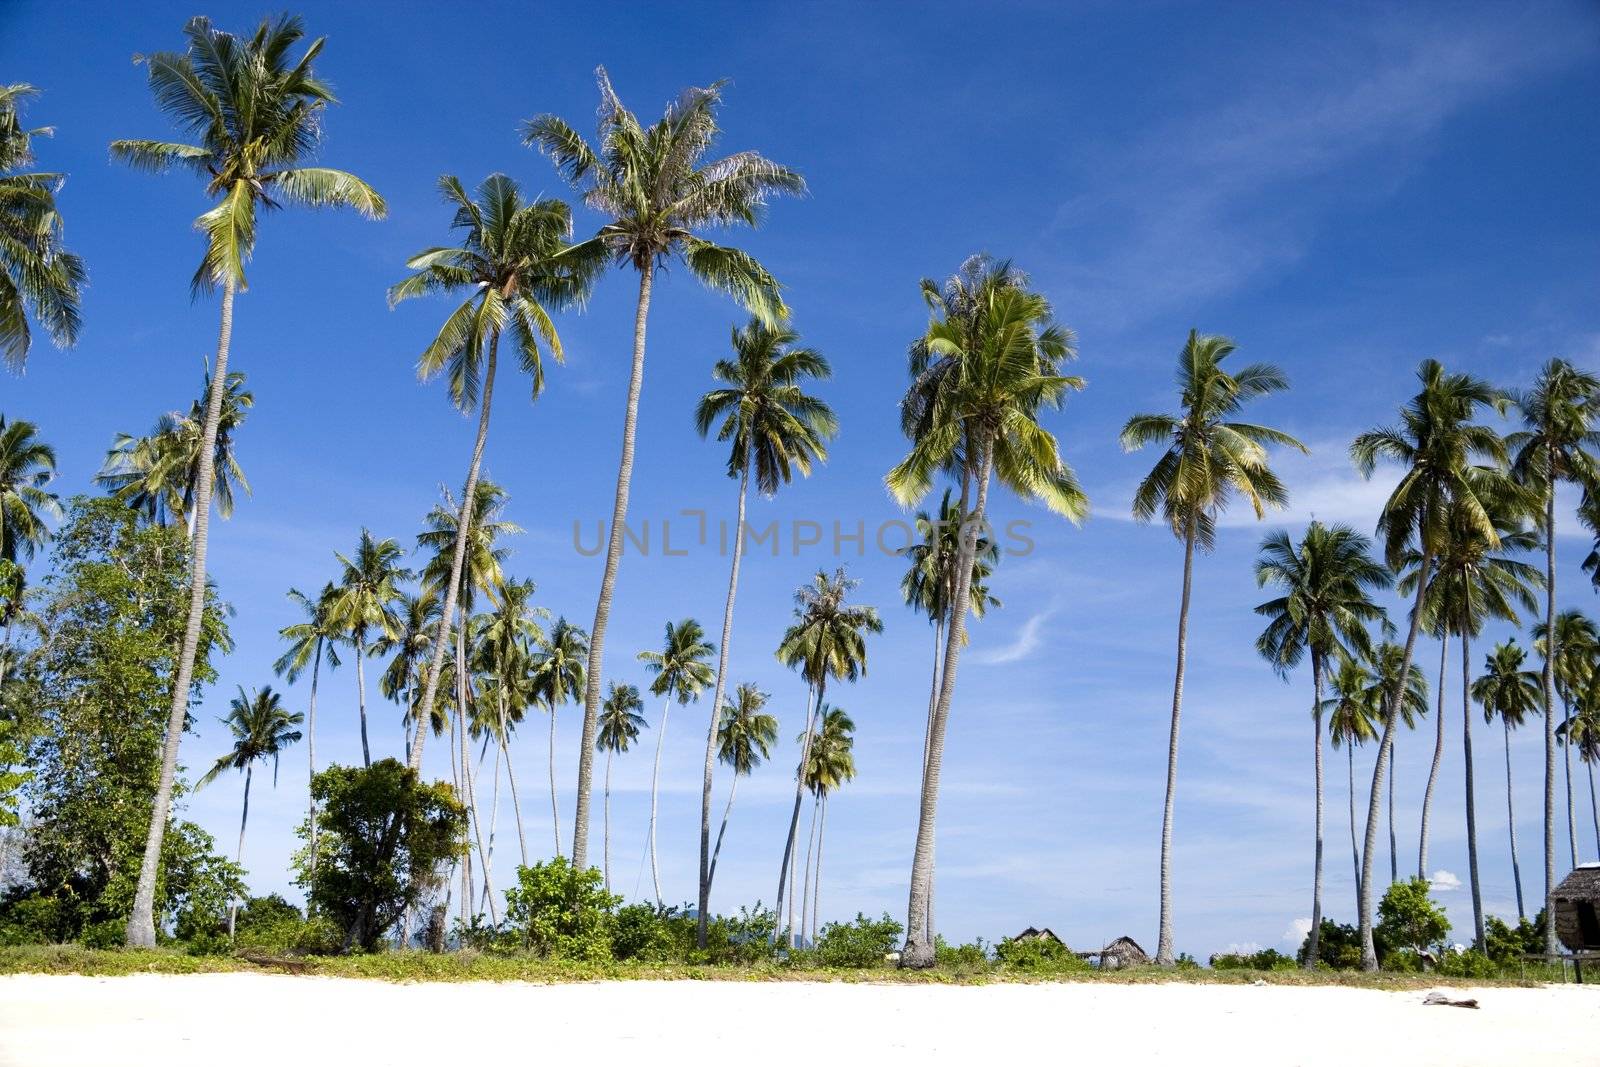 Island Coconut Trees  by shariffc